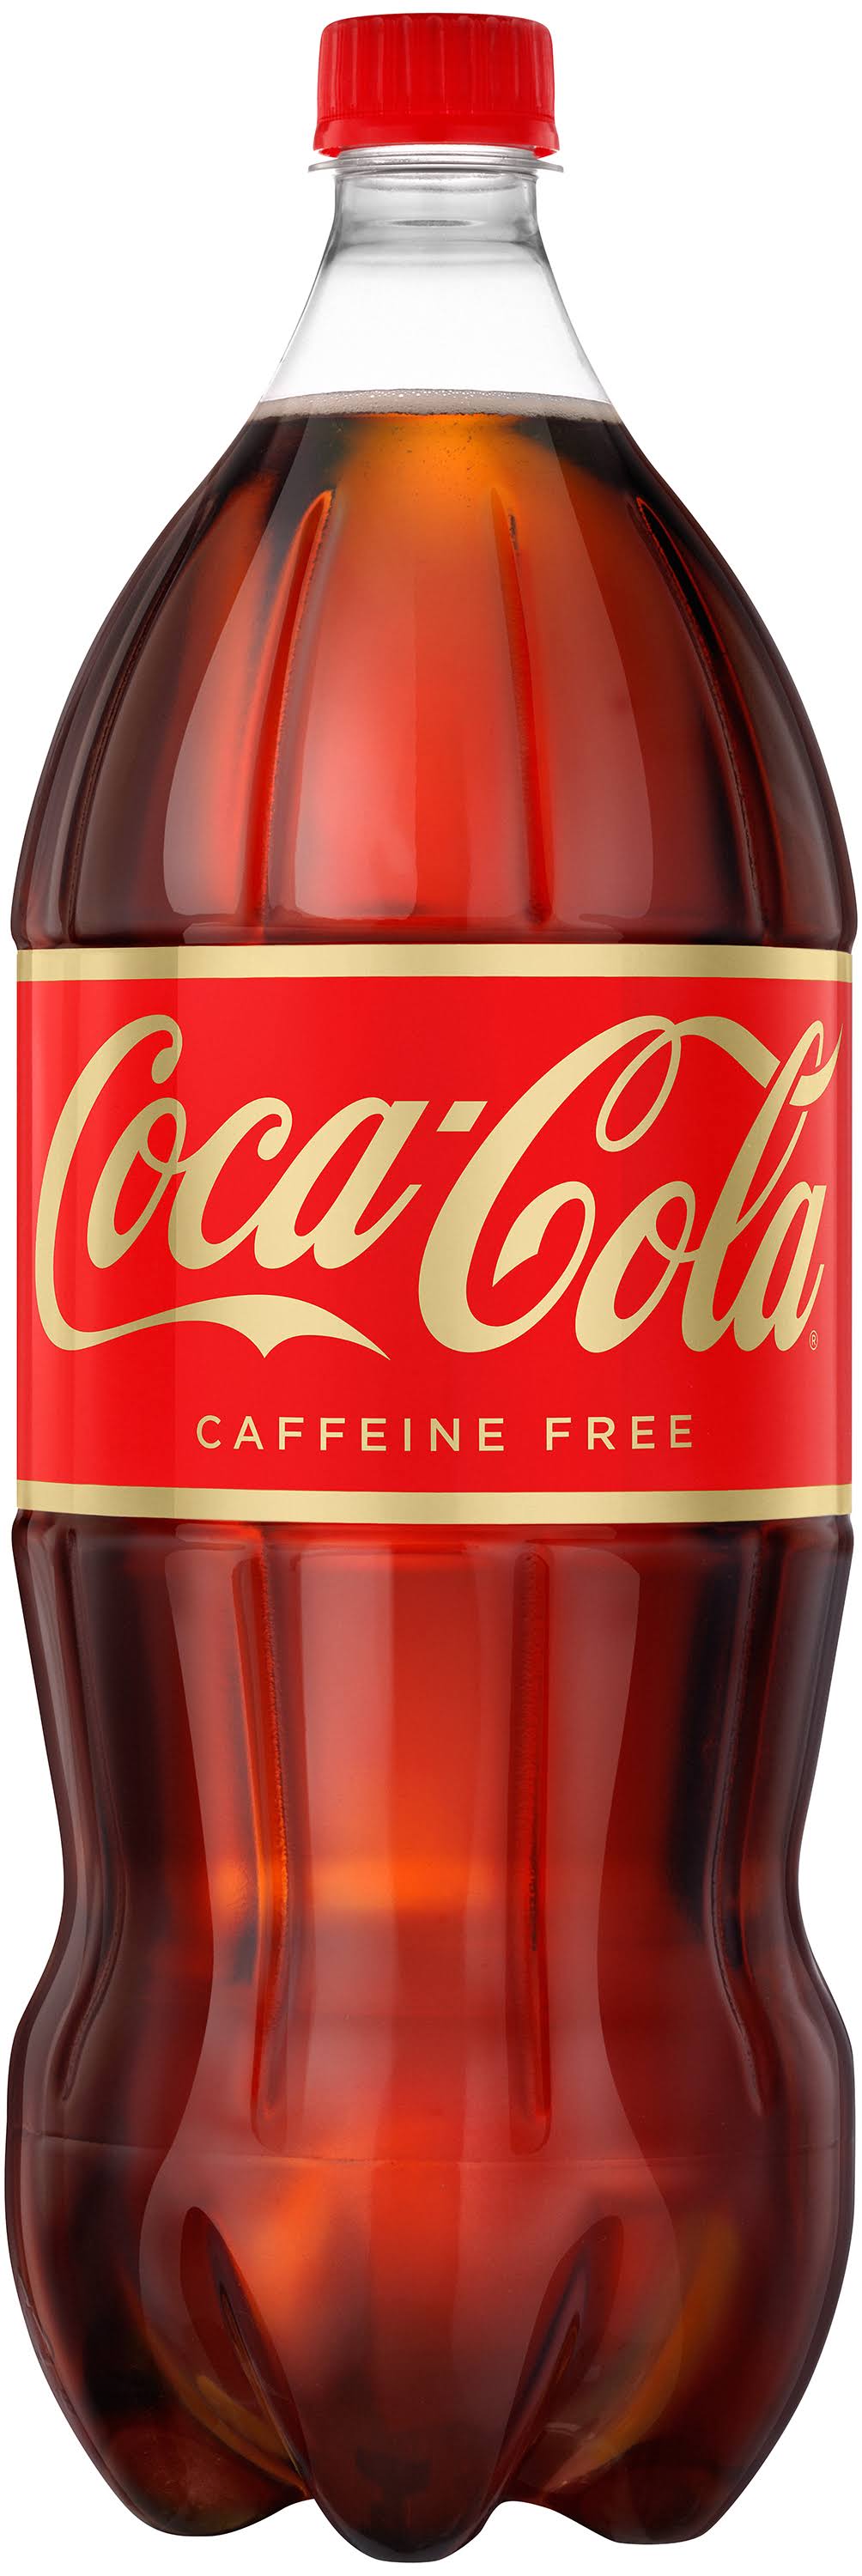 Coca-Cola Caffeine Free Soda